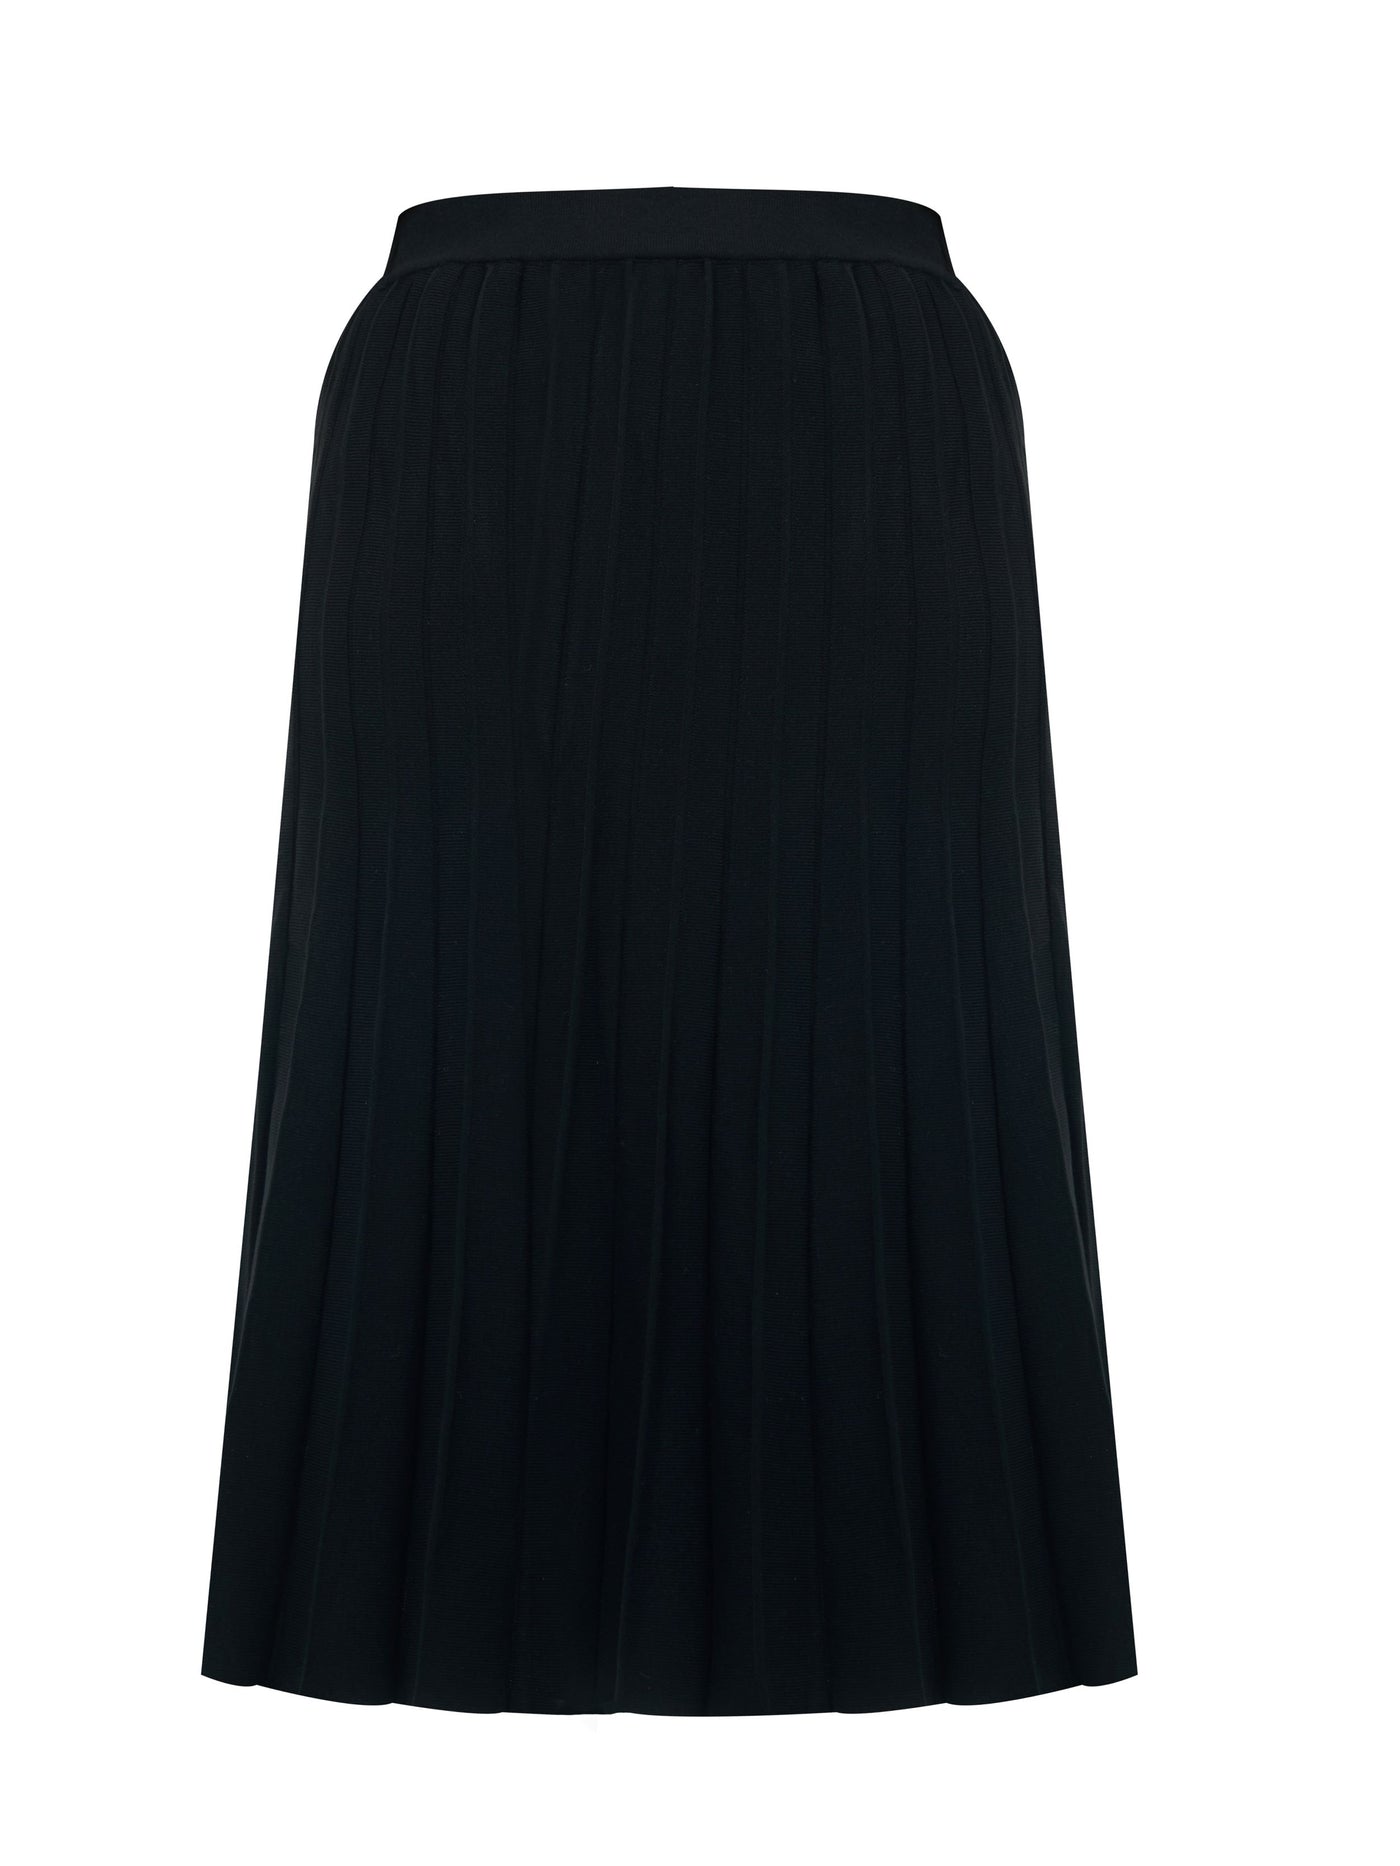 Mat Knit Pleated Long Skirt in Black